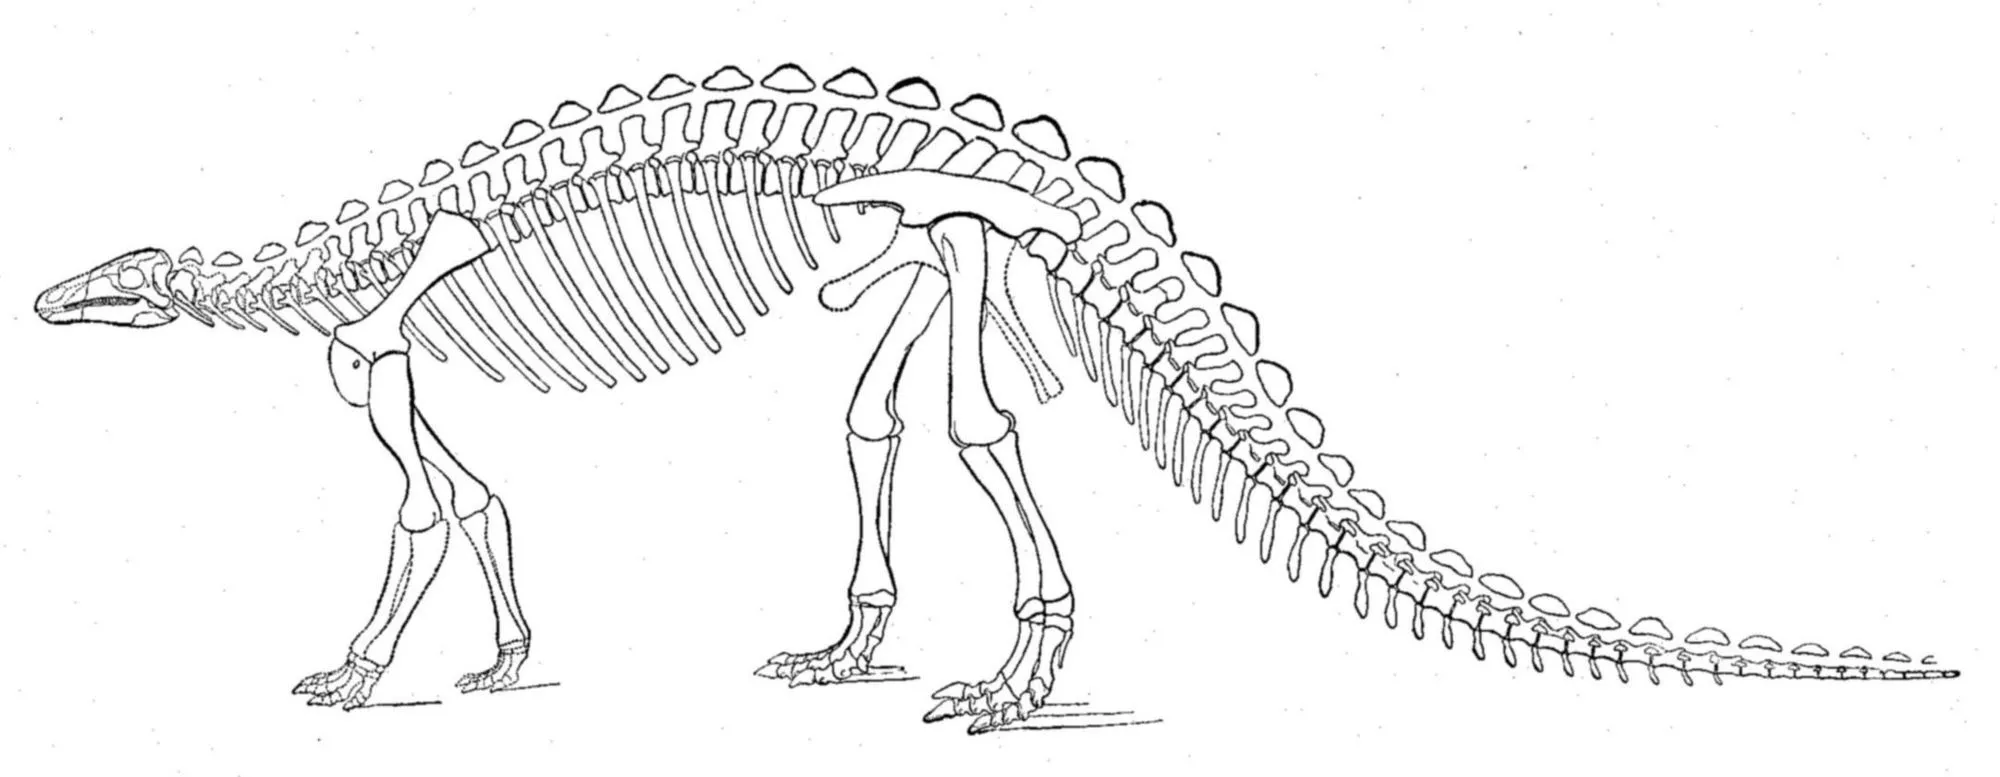 The Scelidosaurus was a quadrupedal dinosaur.